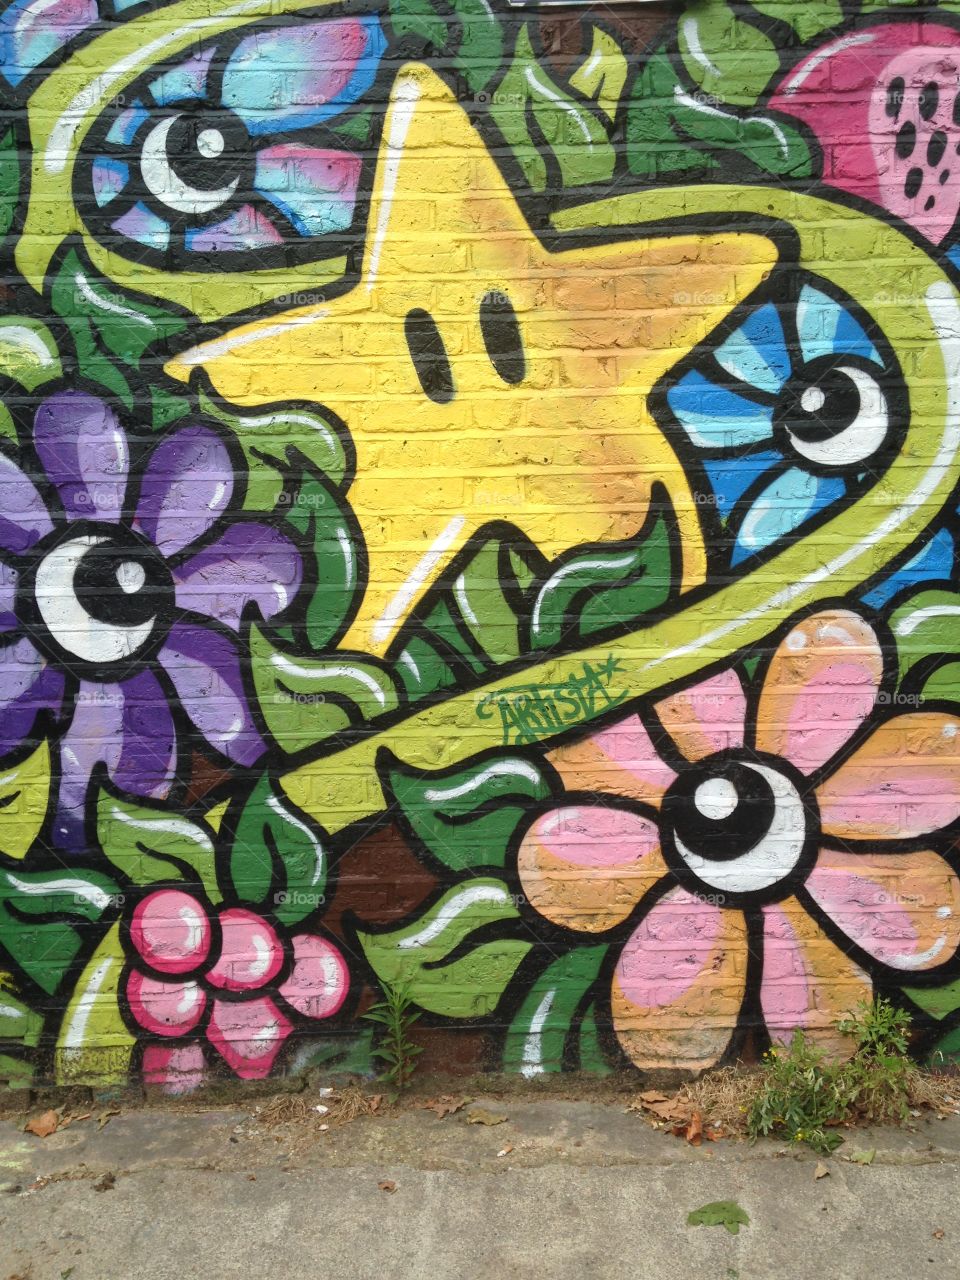 Checking out street art in Brick Lane